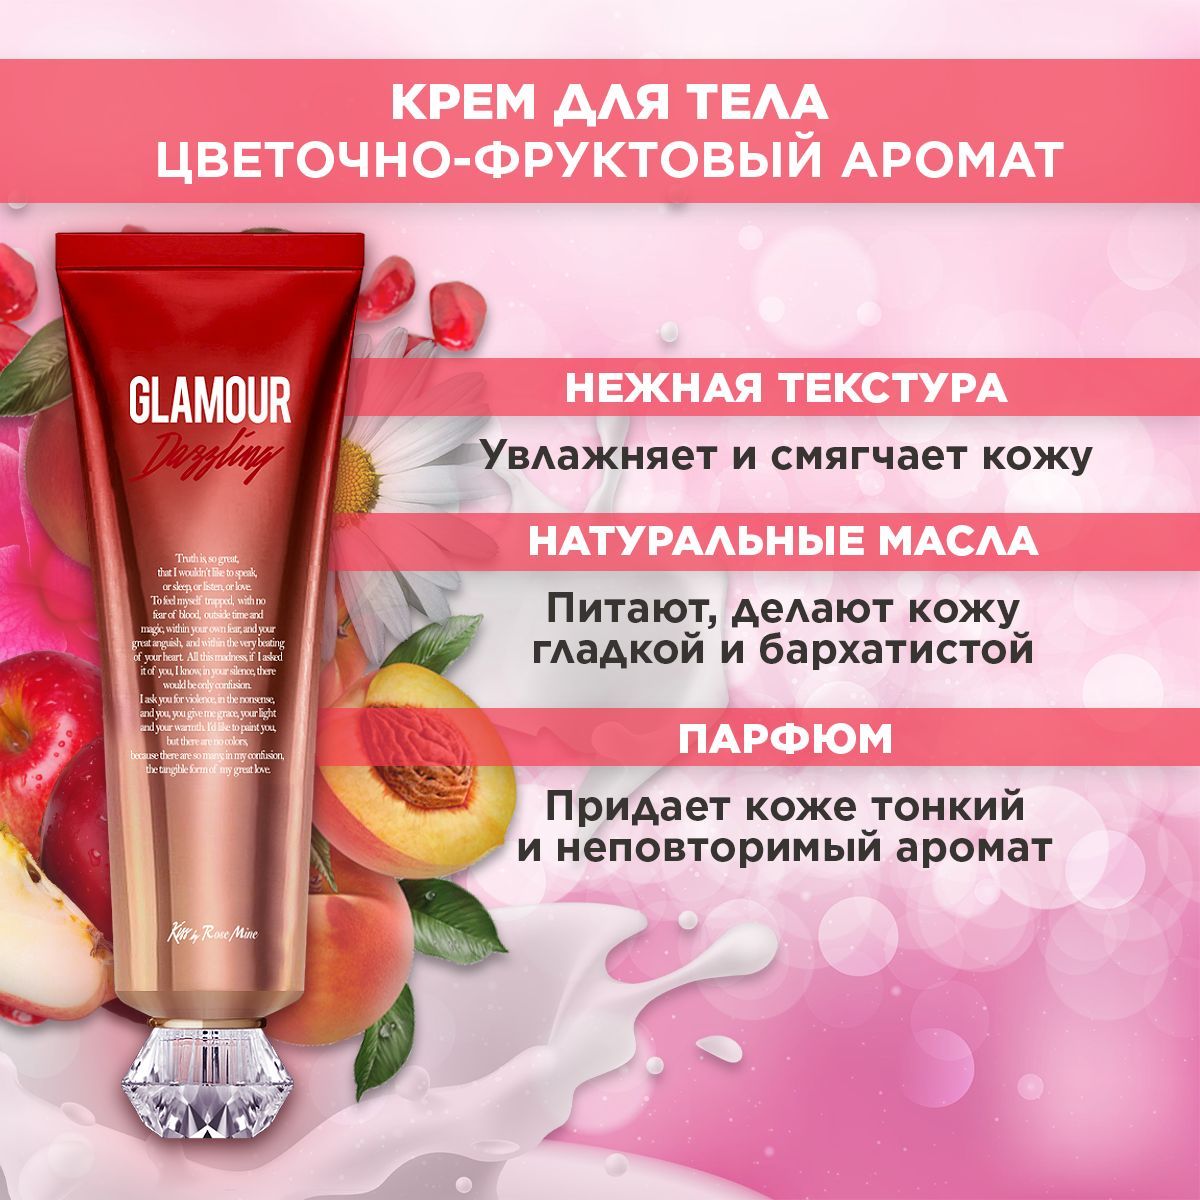 Kiss by Rosemine, Крем для тела, Fragrance Cream, Glamour Dazzling, 140 мл 